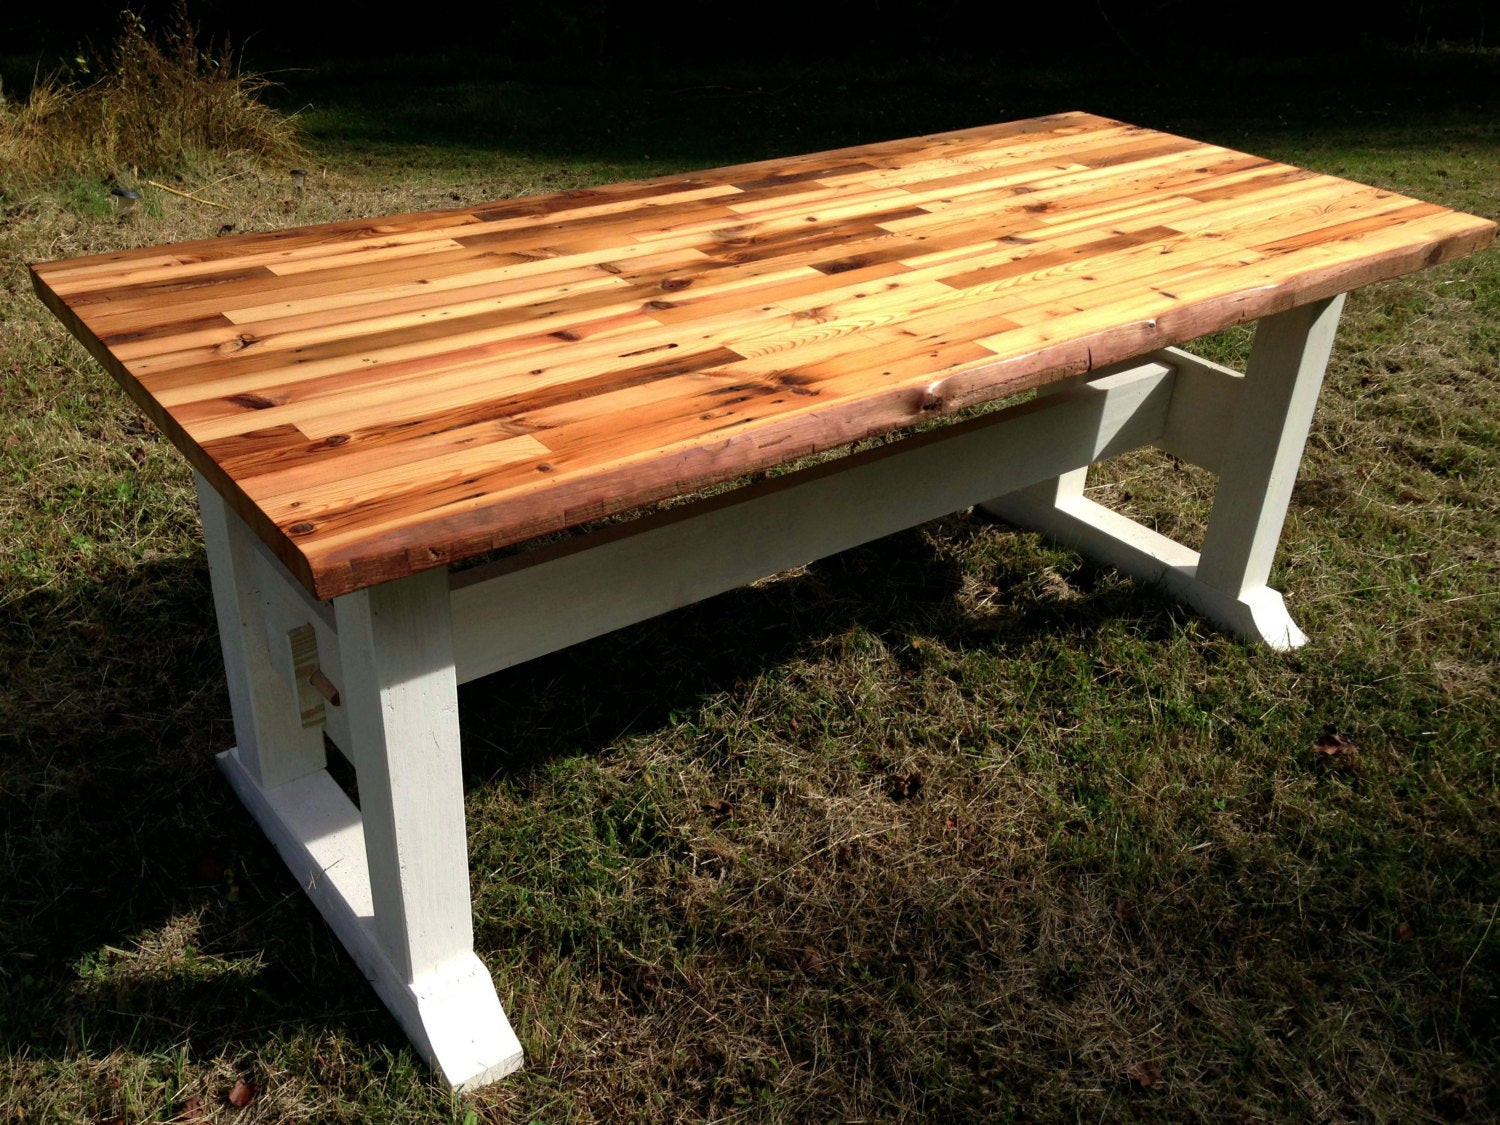 Best ideas about Butcher Block Table DIY
. Save or Pin Butcher block table top and trestle frame Now.